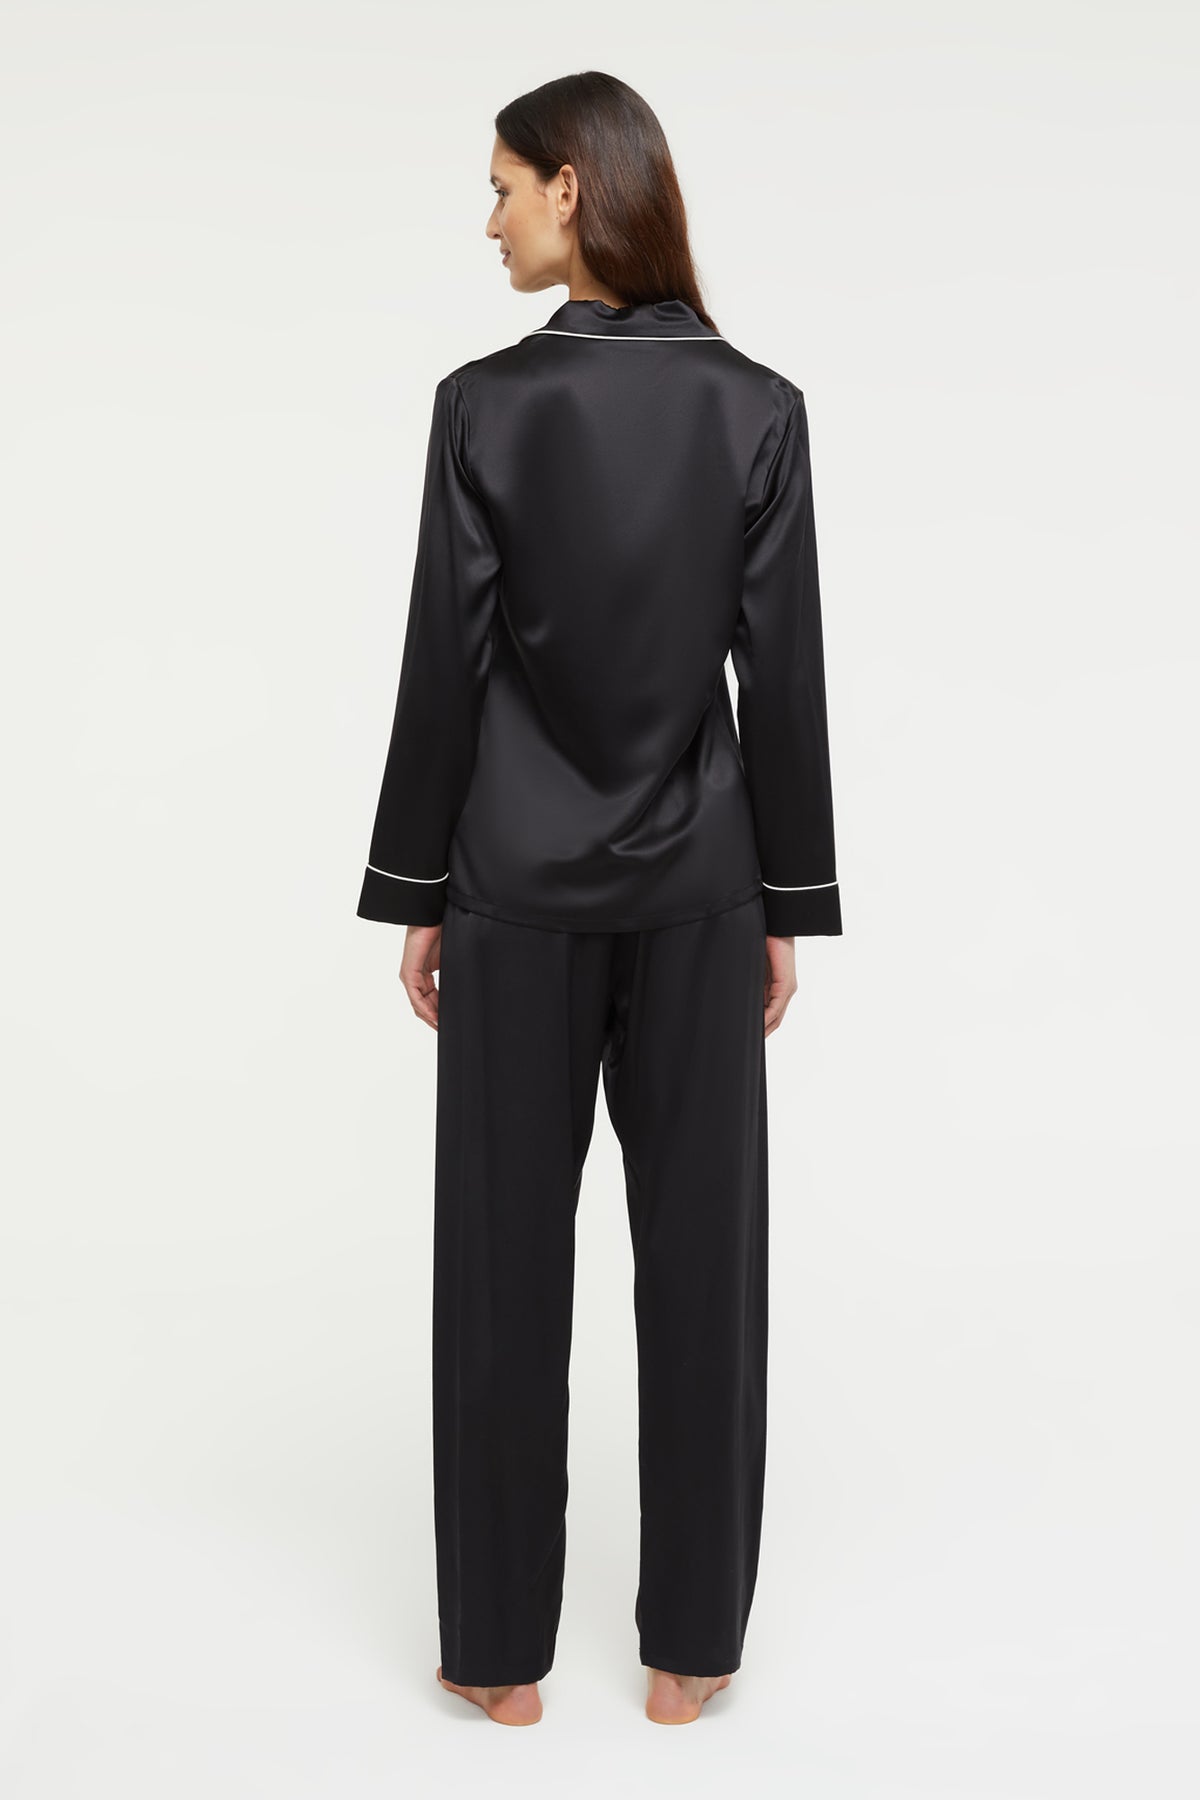 GINIA Fine Finishes pajama in Black/Creme Piping - 100% 19mm Silk Grade 6A